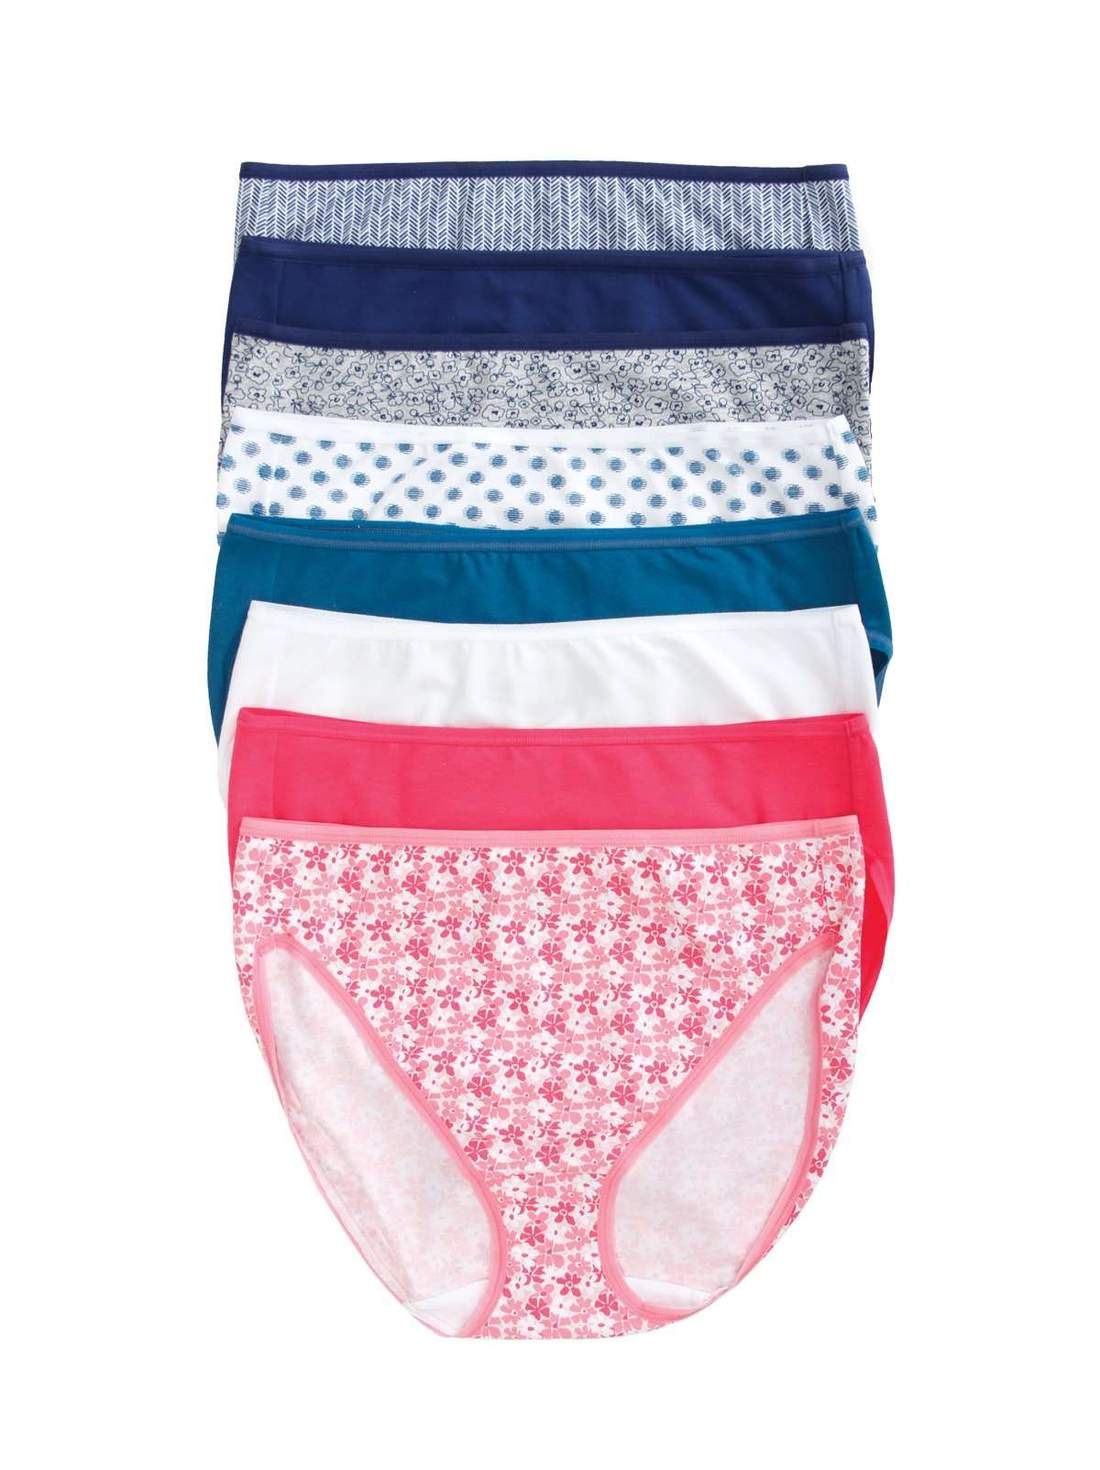 Felina Ladies' Hi-Cut Panty - Large  Assorted Colors (8-pack) - ADDROS.COM